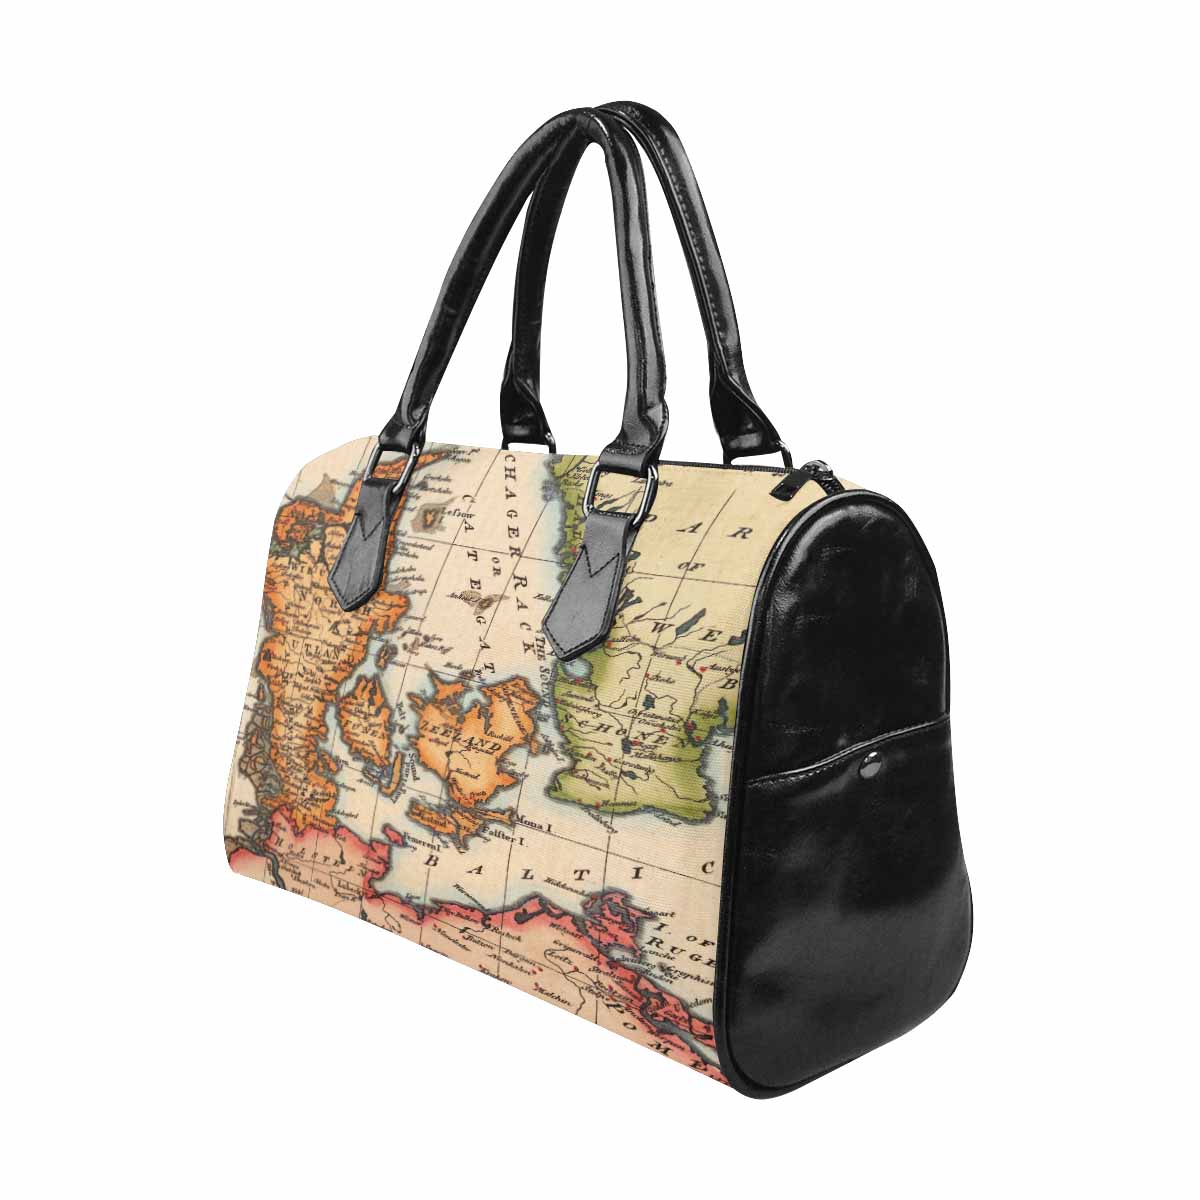 Antique Map design Boston handbag, Model 1695321, Design 34